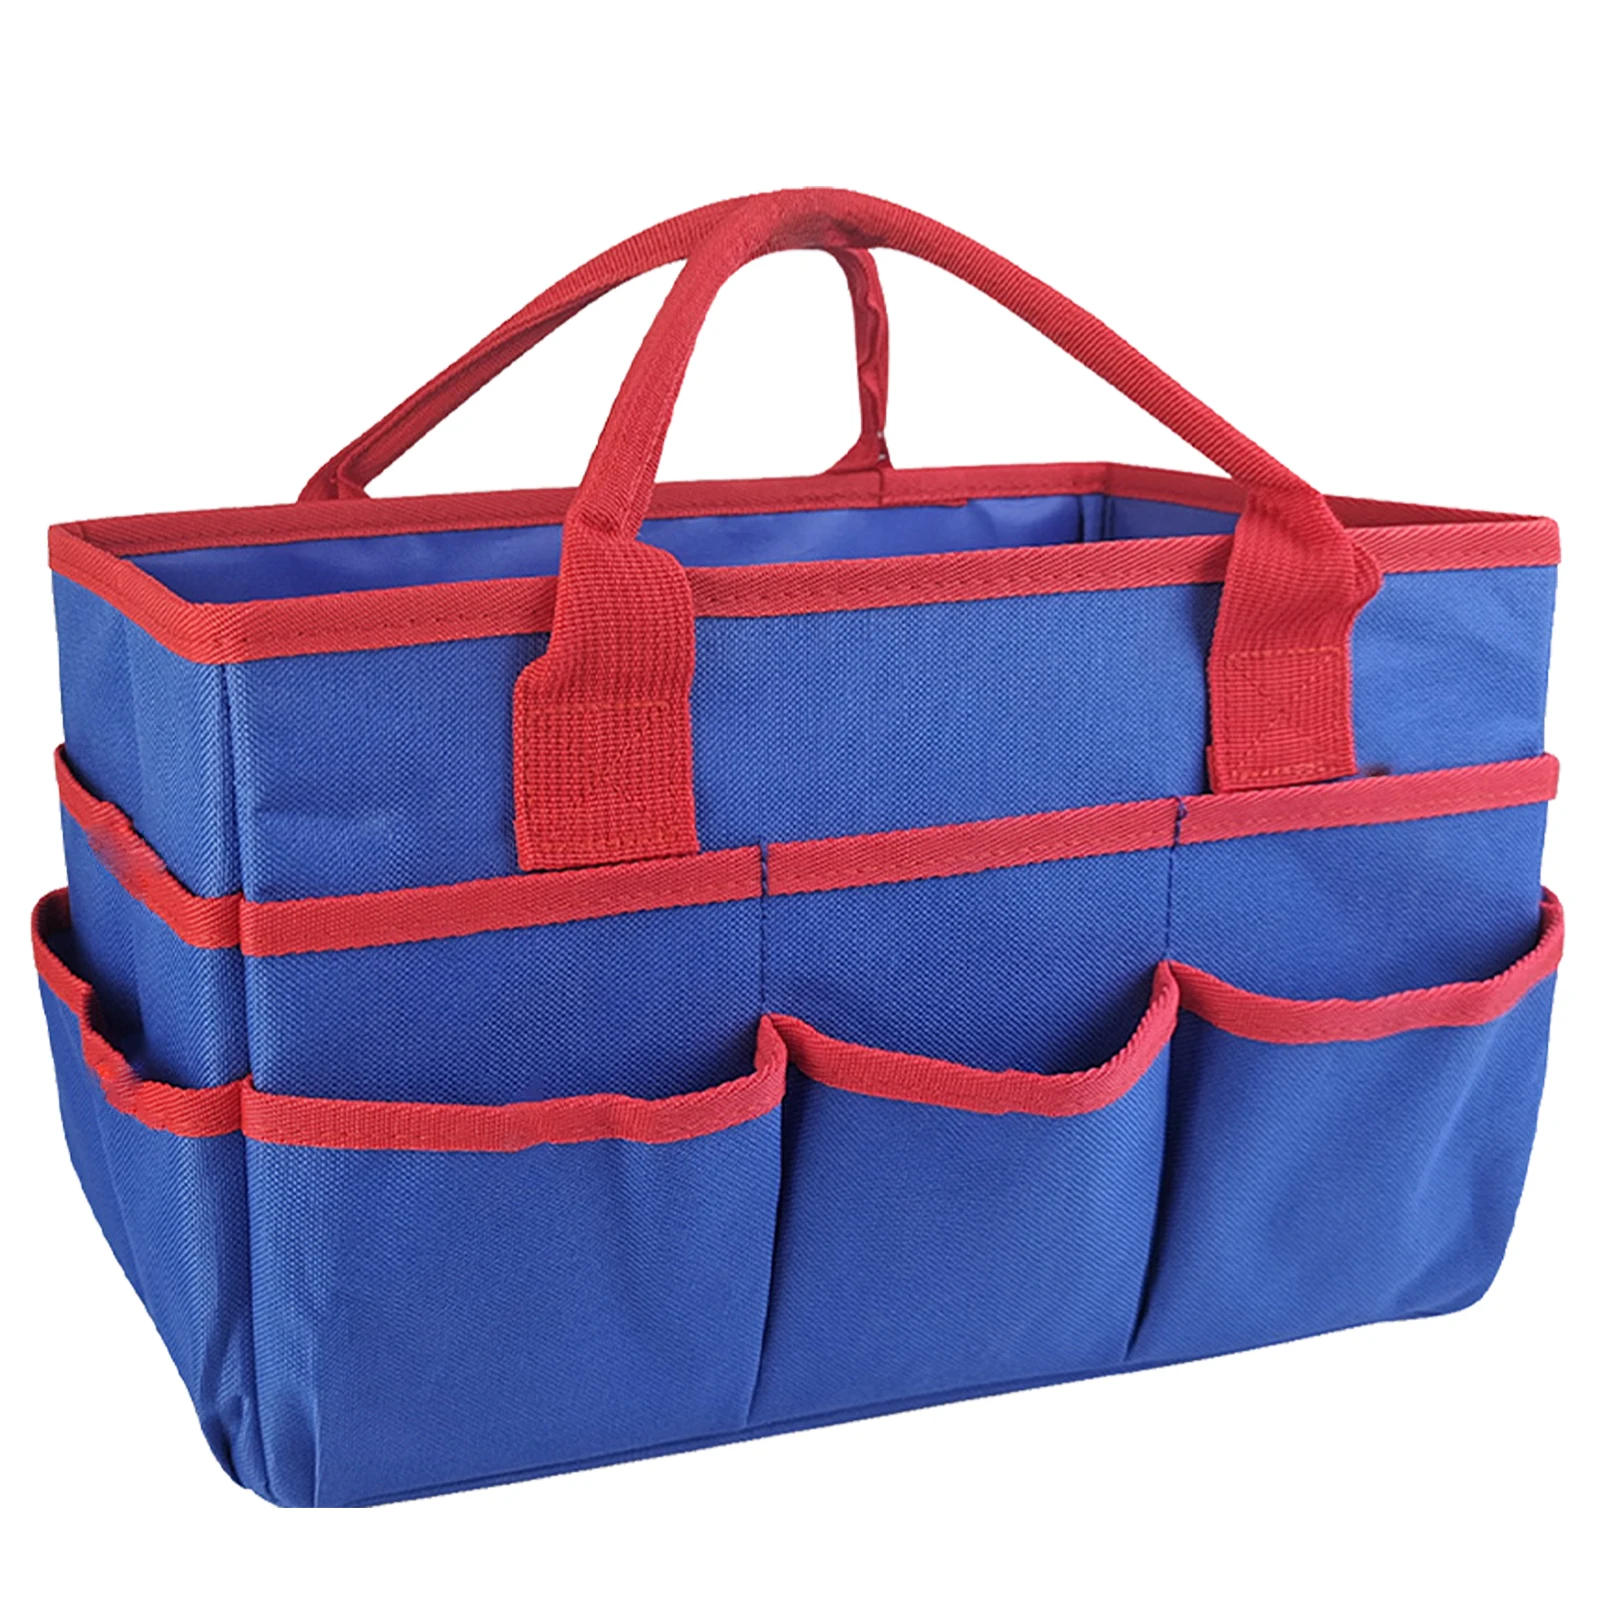 https://ae01.alicdn.com/kf/S8a11144c43d64411937c77dd38850d46X/Oxford-Cloth-Multipurpose-Waterproof-Tote-Bag-Tool-Sewing-Blue-Red-Pets-Caddy-Cleaning-Supplies-Craft-Art.jpg